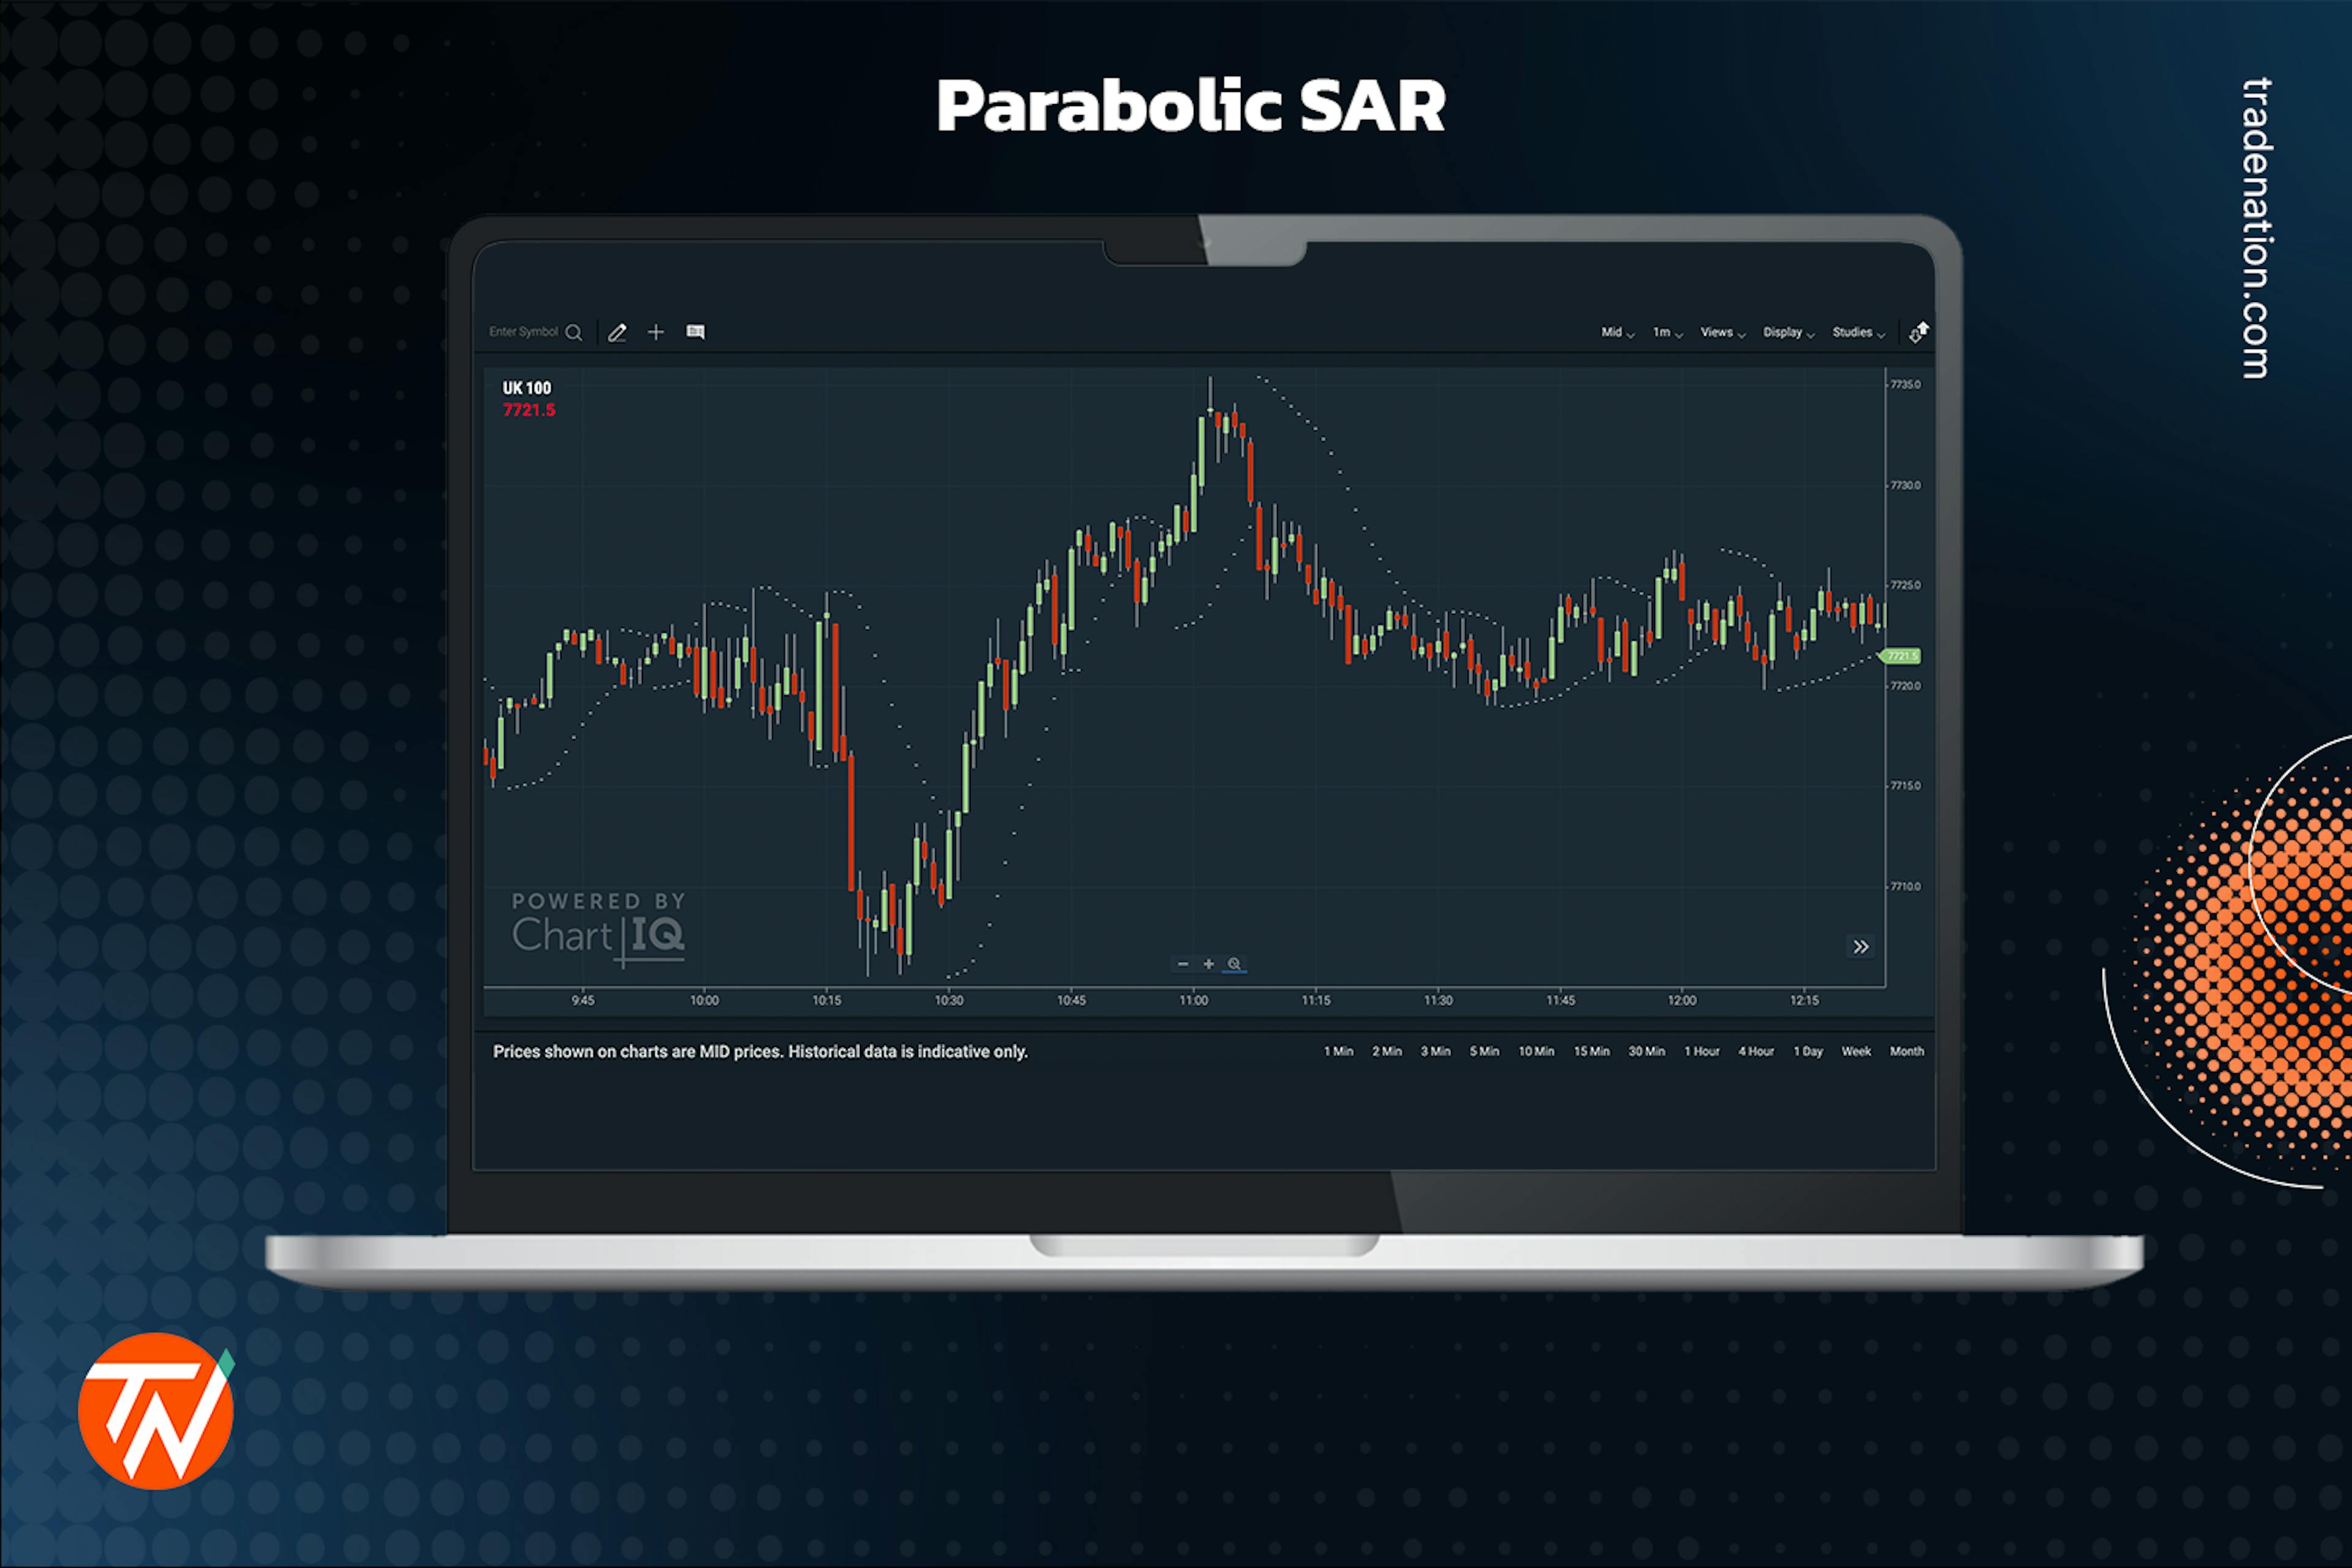 Parabolic SAR demonstrated